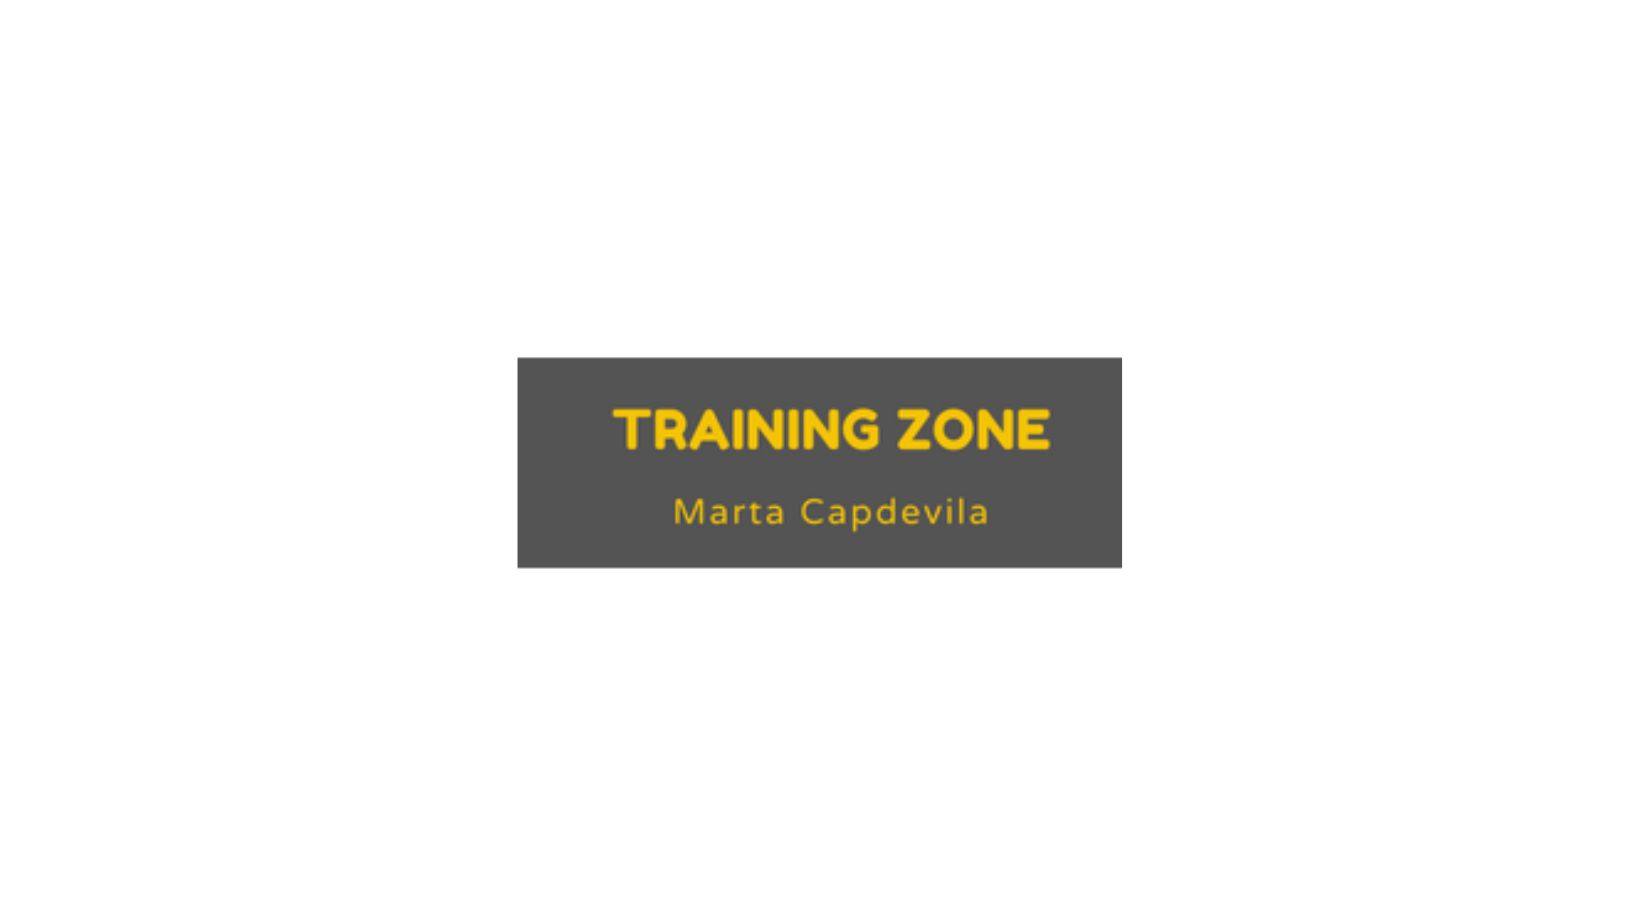 Website for the Training Zone training center